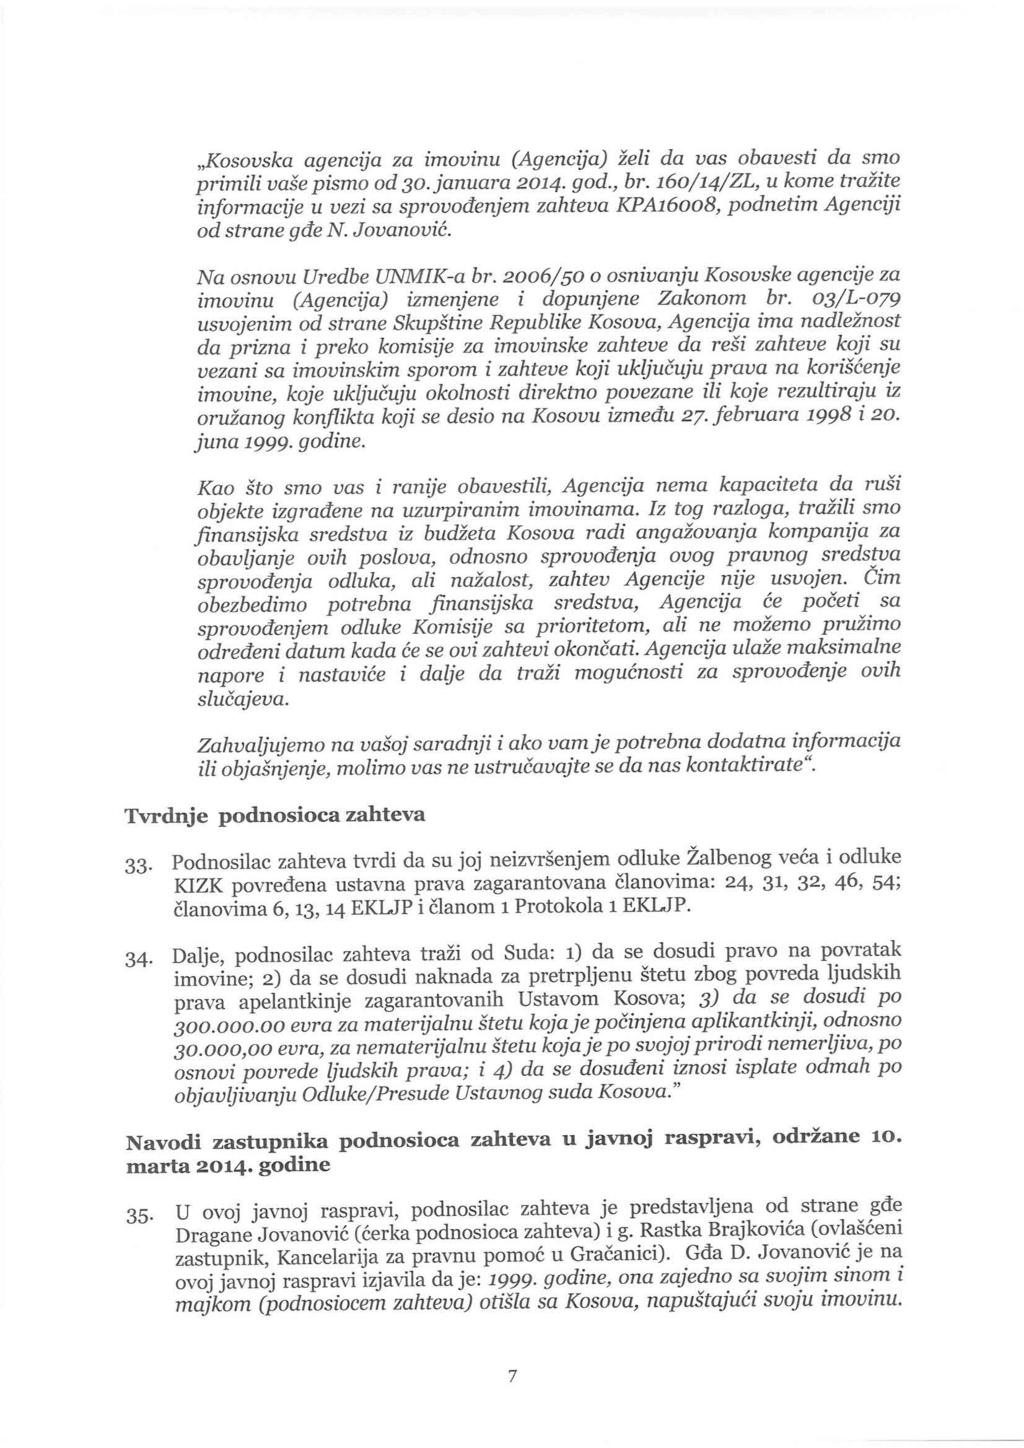 "Kosovska agencija za imovinu (Agencija) zeli da vas obavesti da smo primili vase pismo od 30.januara 2014. god., br.